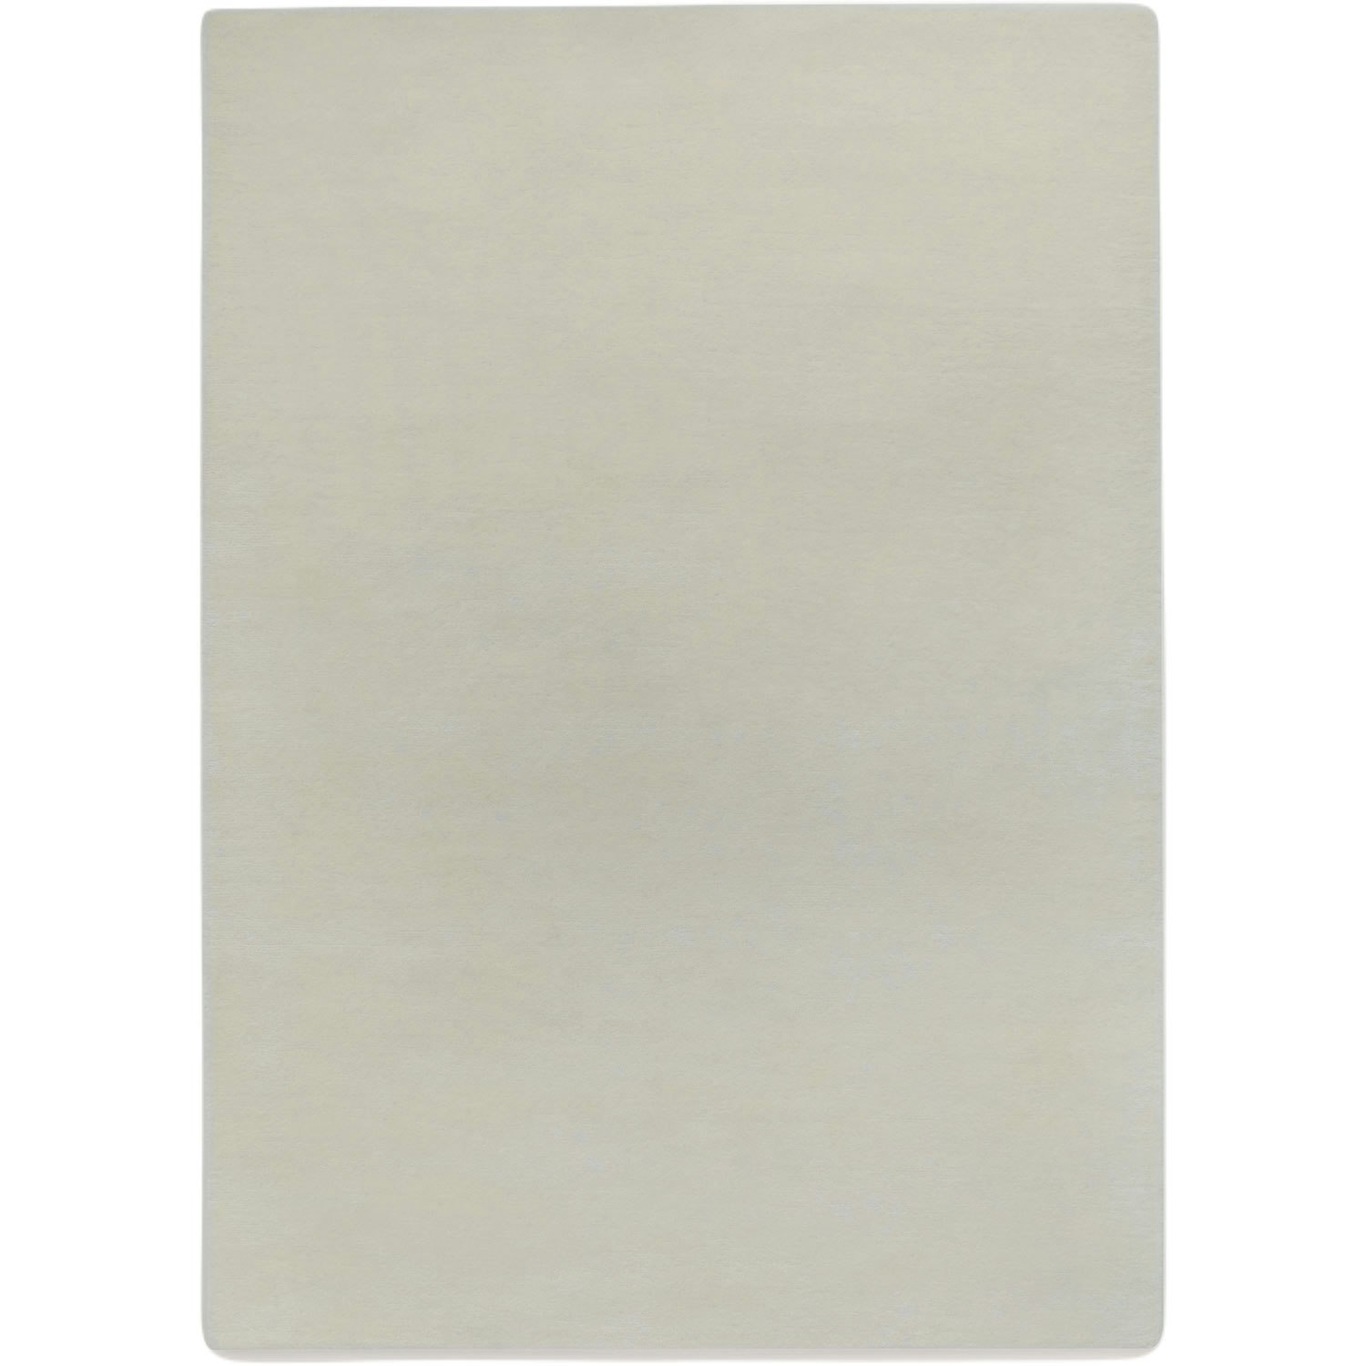 Liljehok Wool Rug Off-white, 170x240 cm